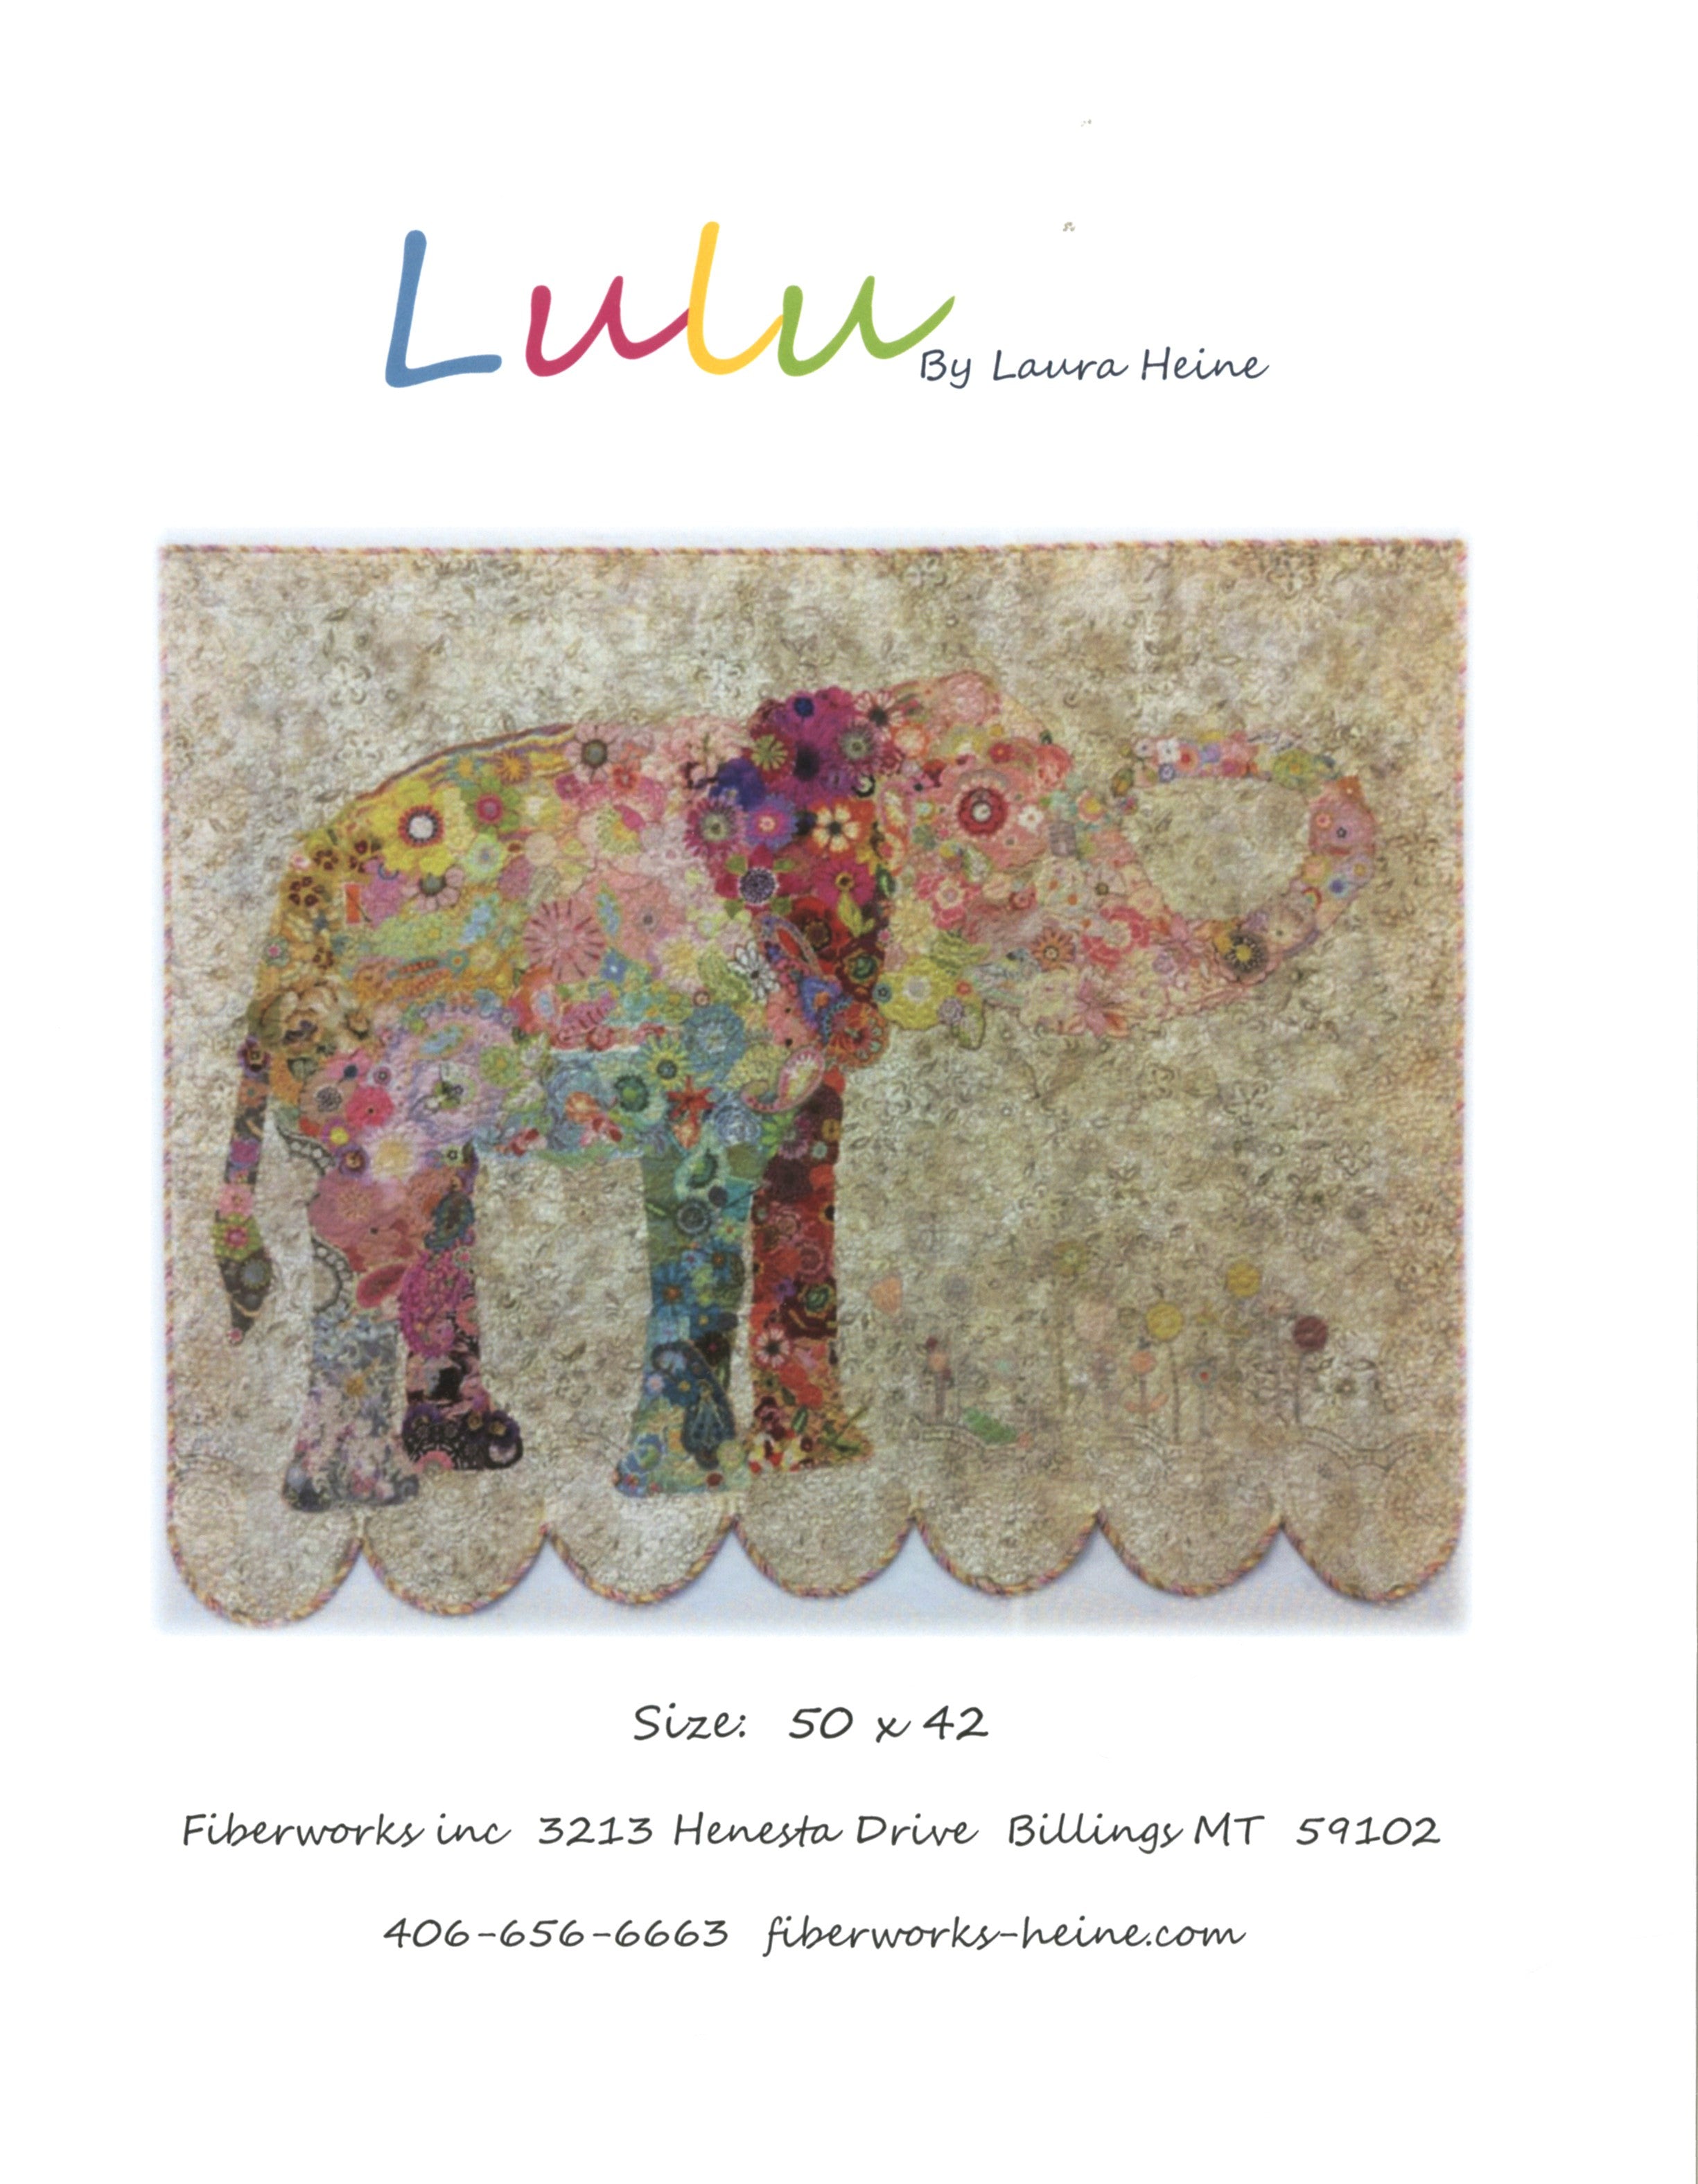 Lulu Elephant Fused Fabric Collage Quilt Pattern by Laura Heine of Fiberworks